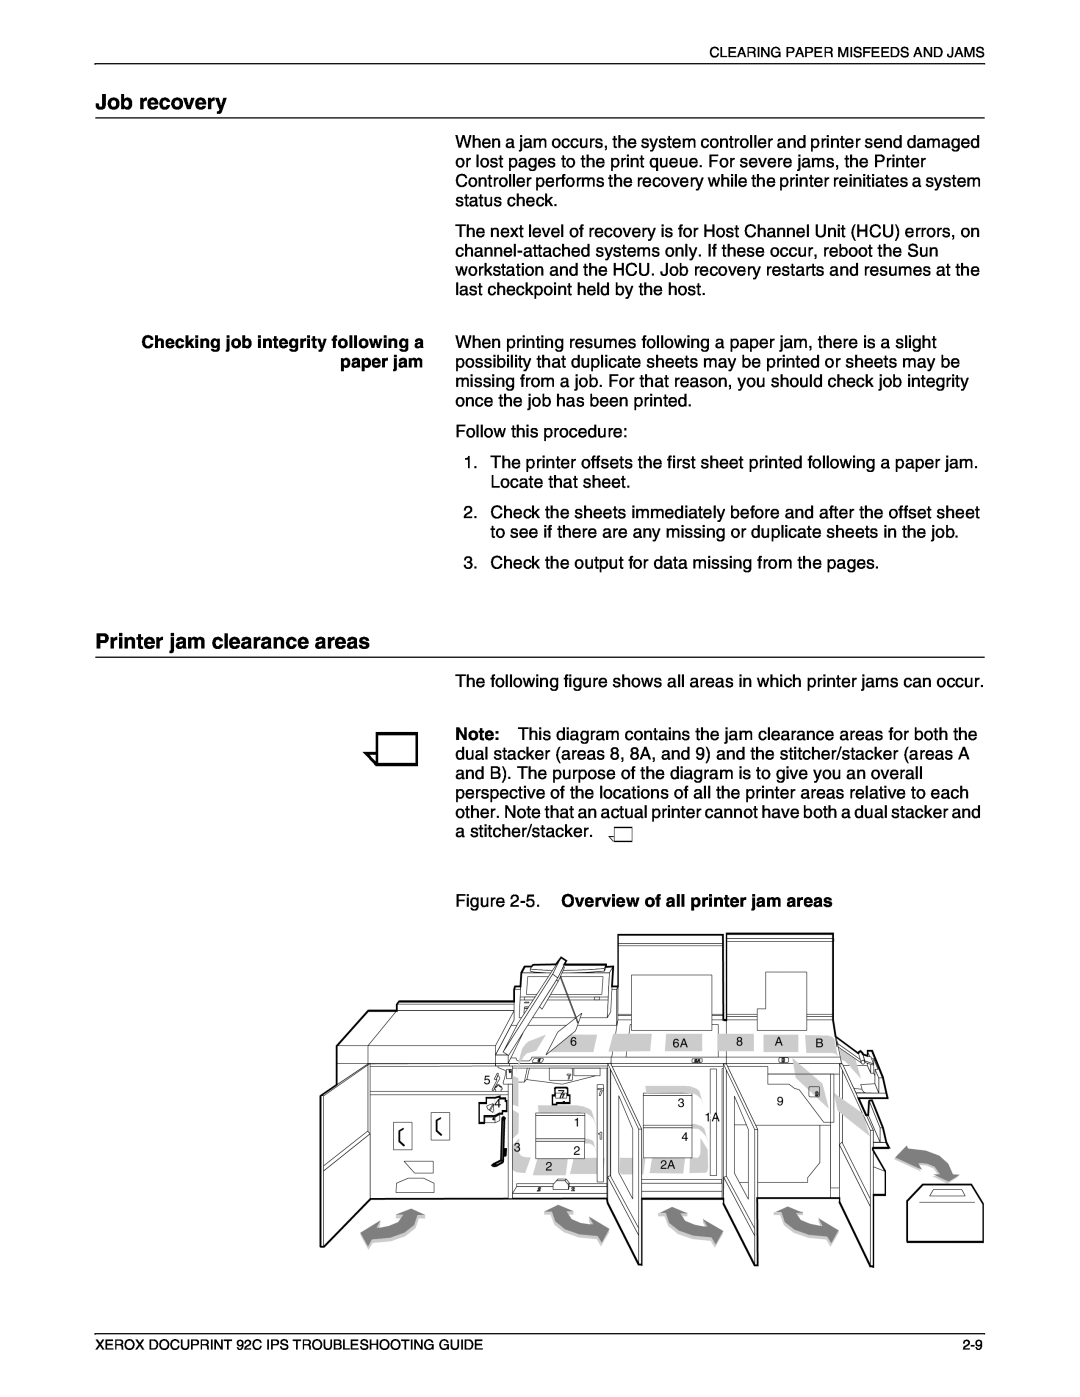 Xerox 92C IPS manual Job recovery, Printer jam clearance areas, Checking job integrity following a paper jam 